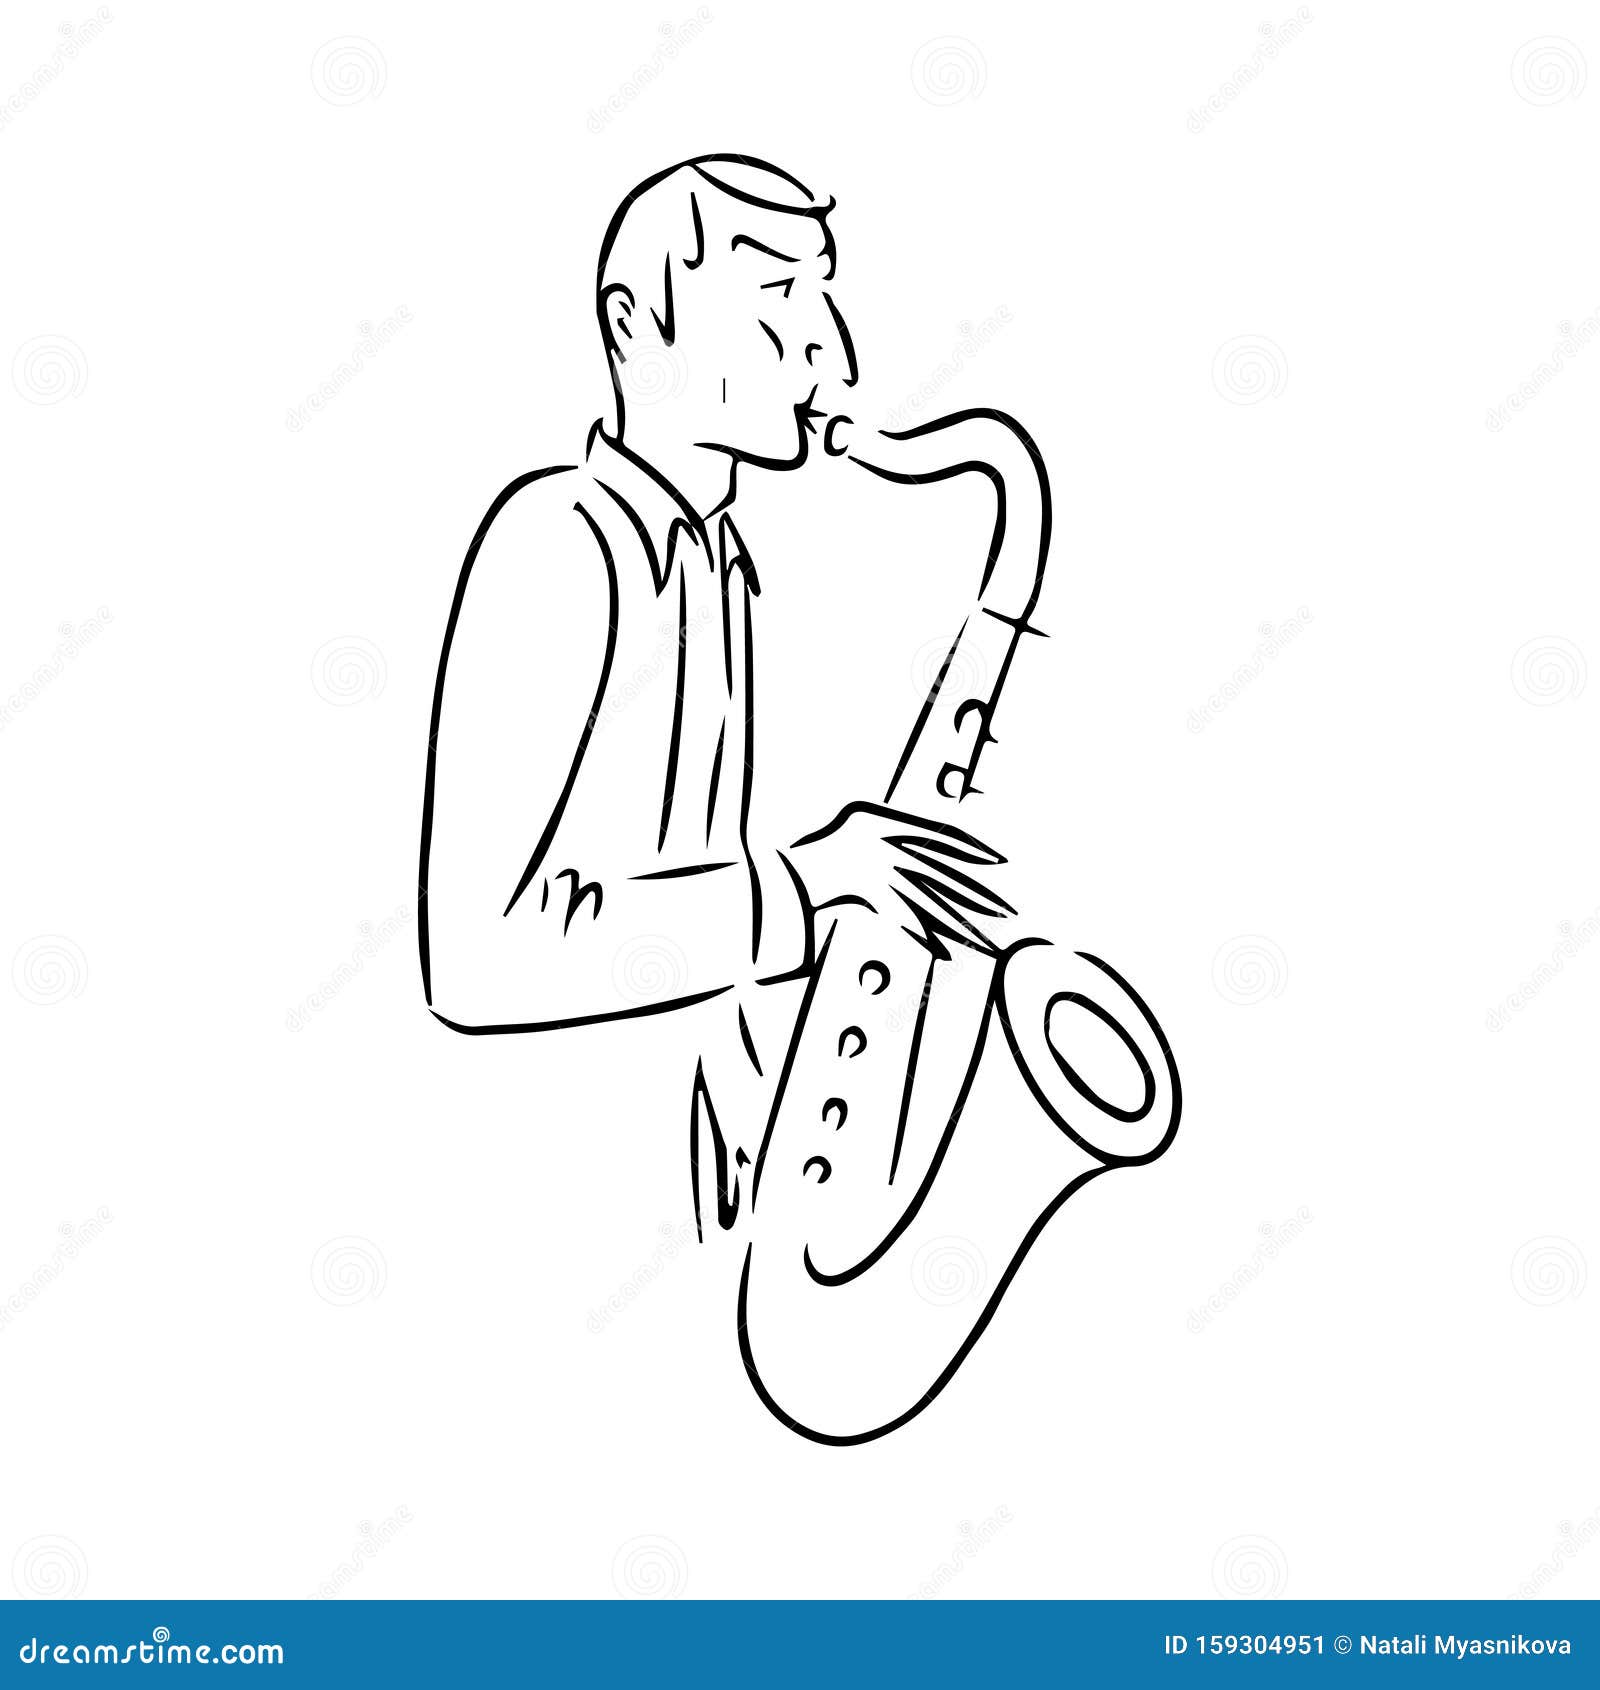 Jazz Music Hand Drawn Sketch Saxophone Musical Instrument Vector  Illustration Stock Illustration - Download Image Now - iStock